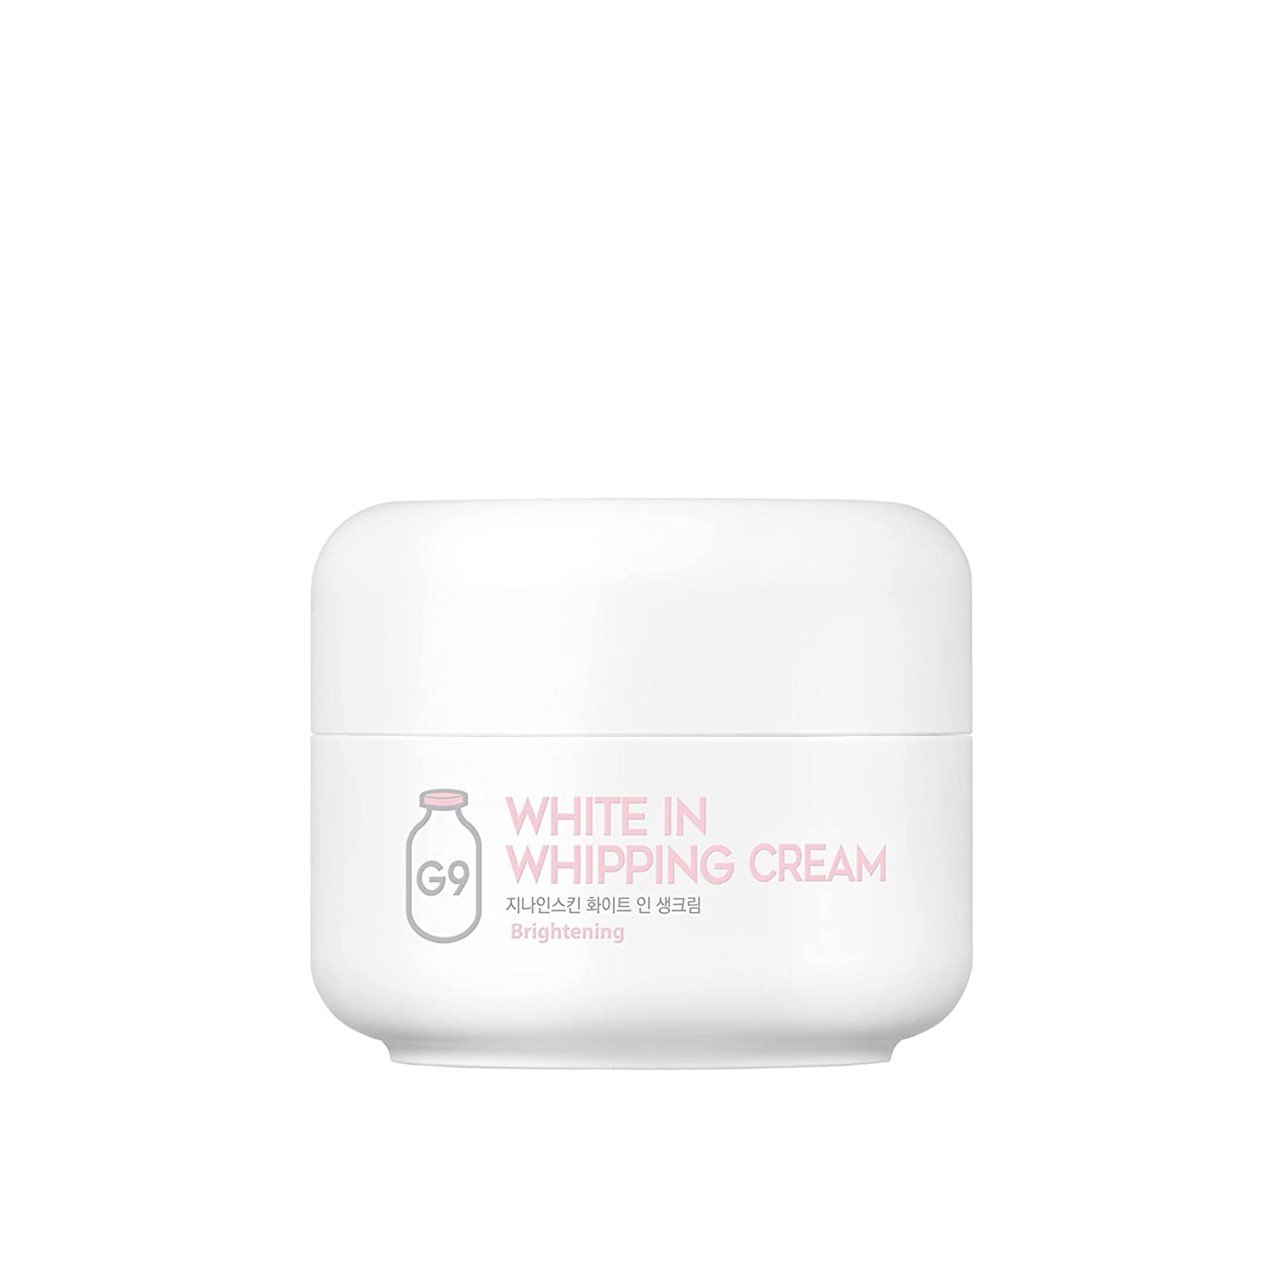 G9 Skin White in Milk Whipping Cream 50g